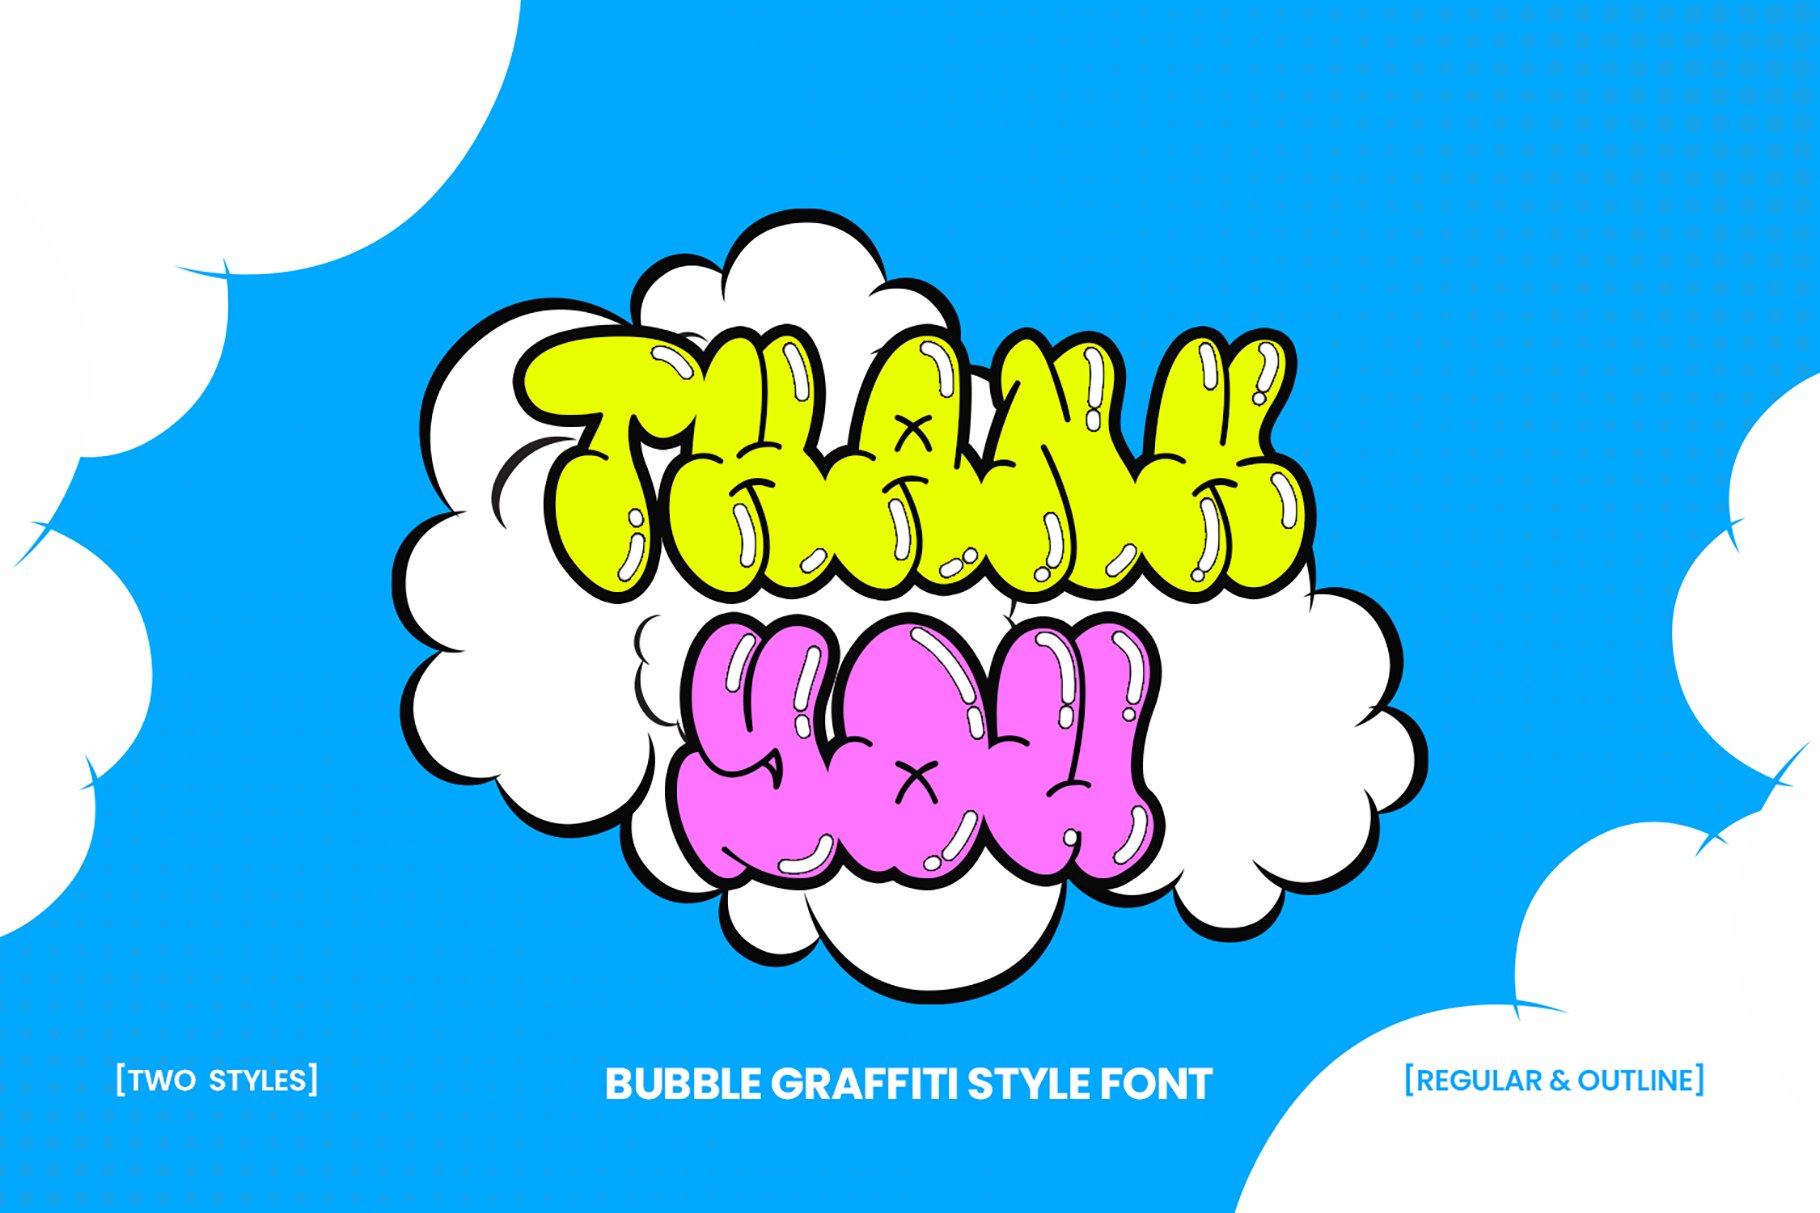 Monsie – Bubble Graffiti Font 创意趣味泡泡涂鸦字体 设计素材 第9张